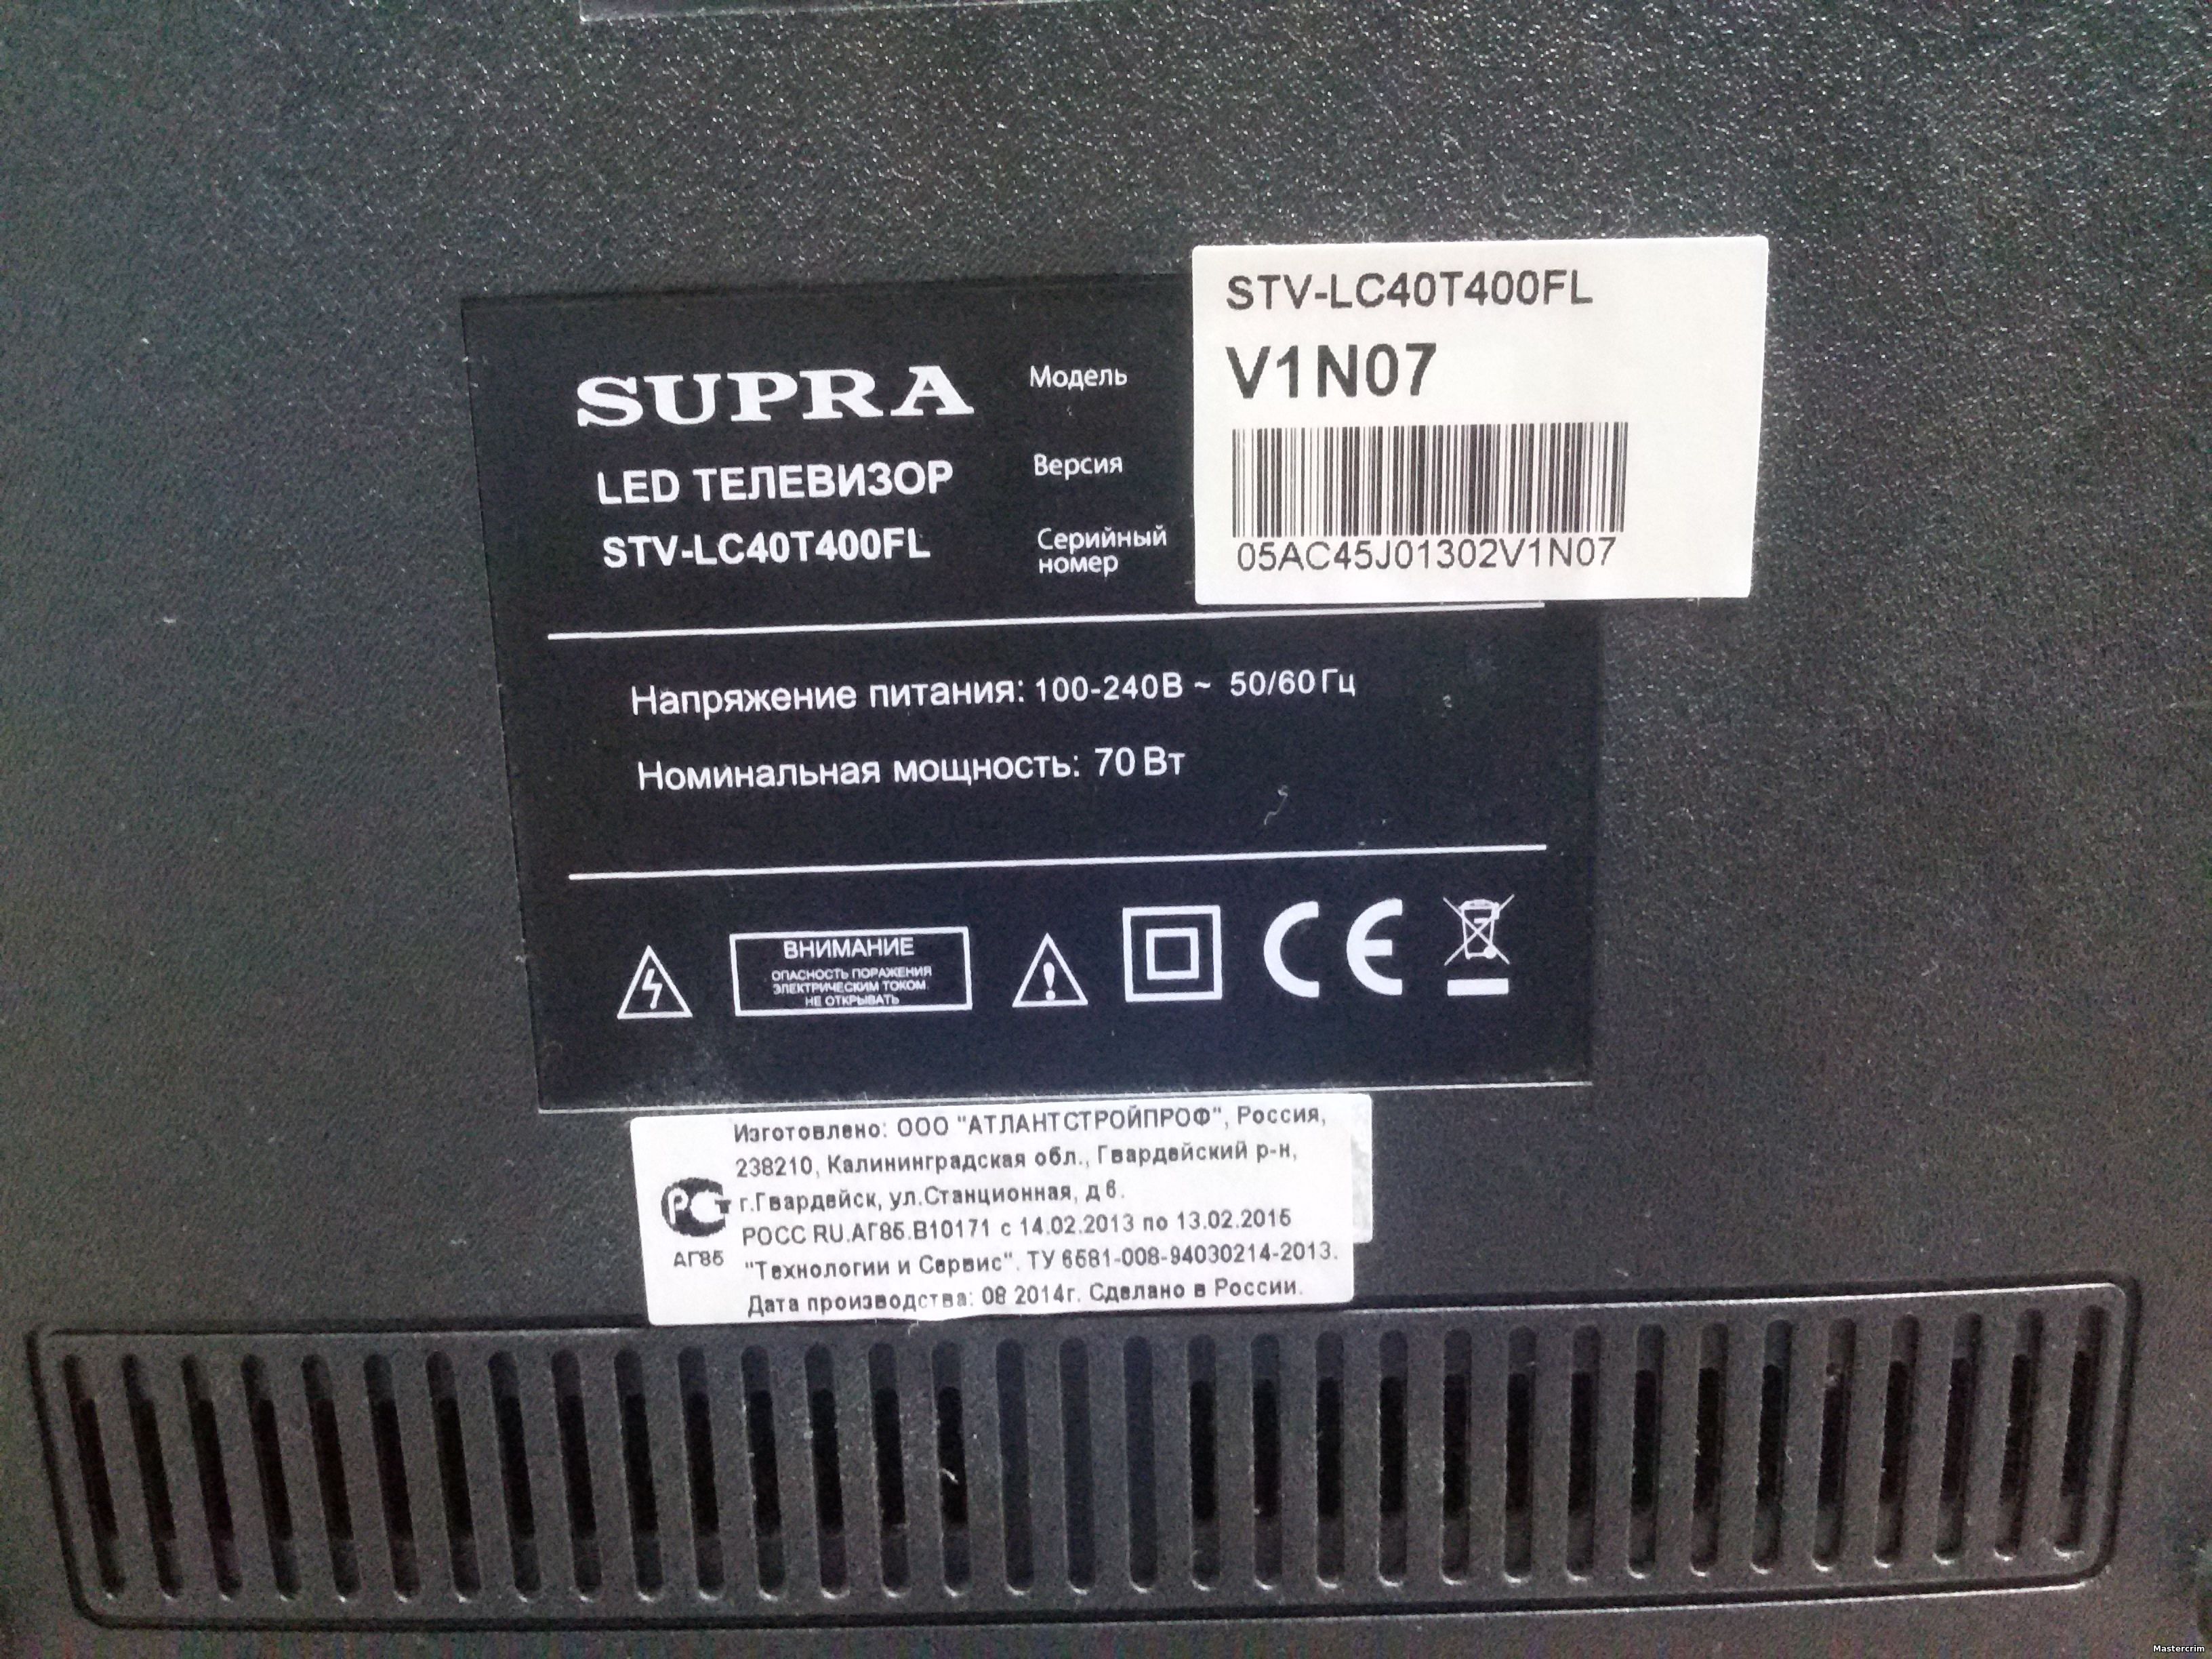 Supra STV-LC40T400FL